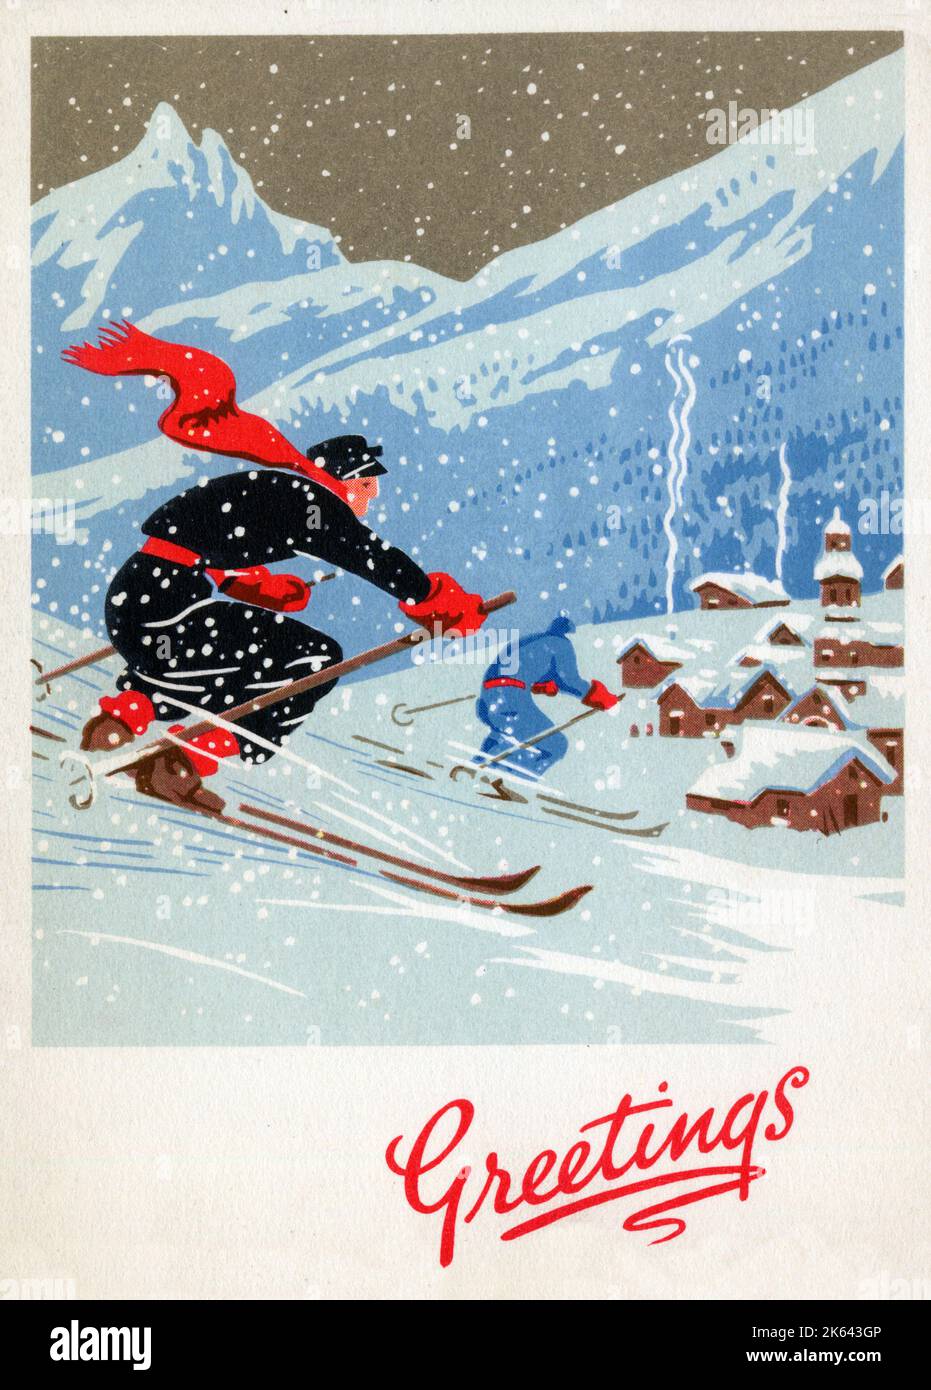 Christmas and New Year Greetings Card - Skiing Stock Photo